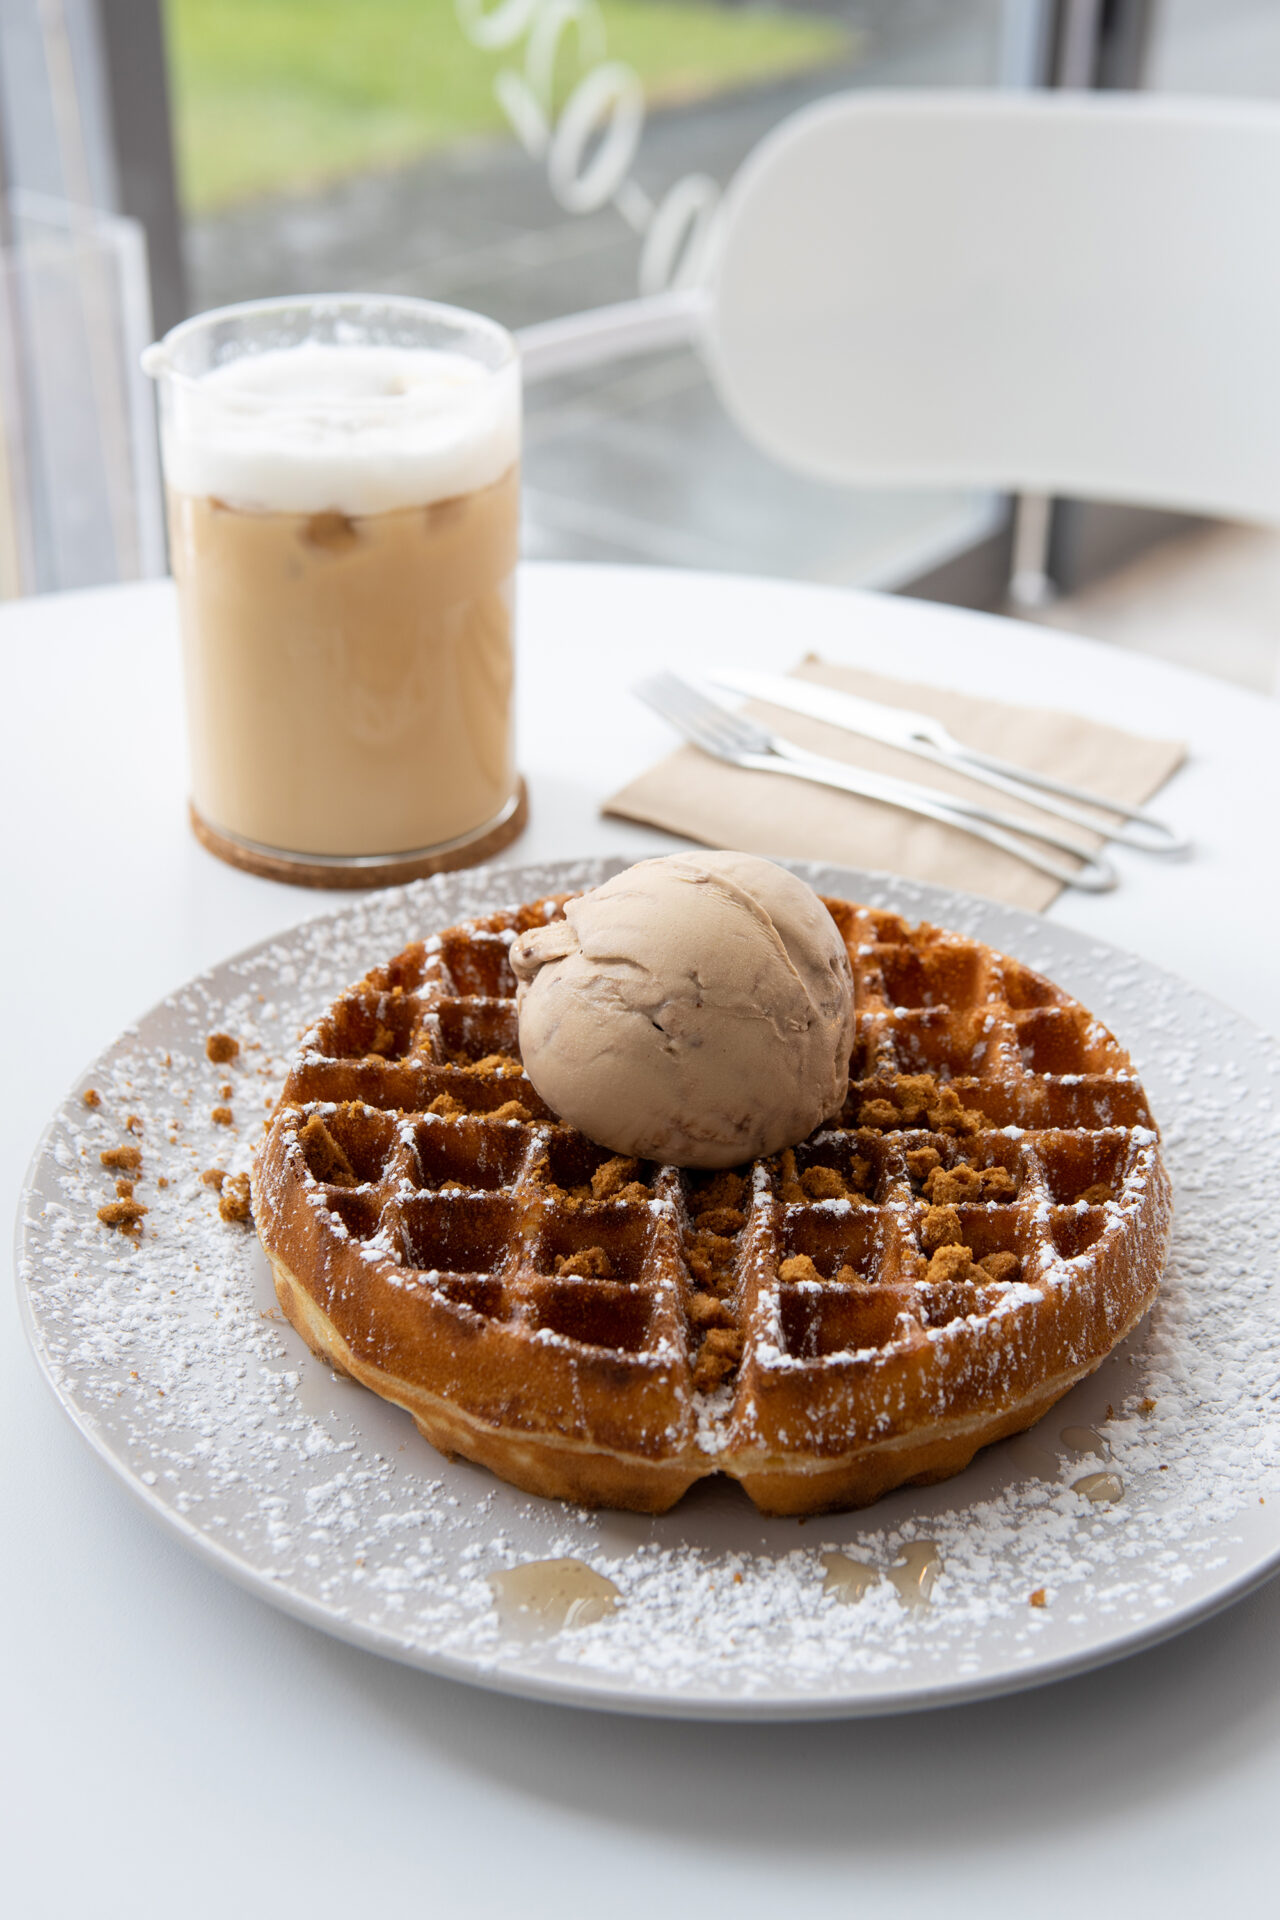 ascend design ice cream waffles cafe interior food